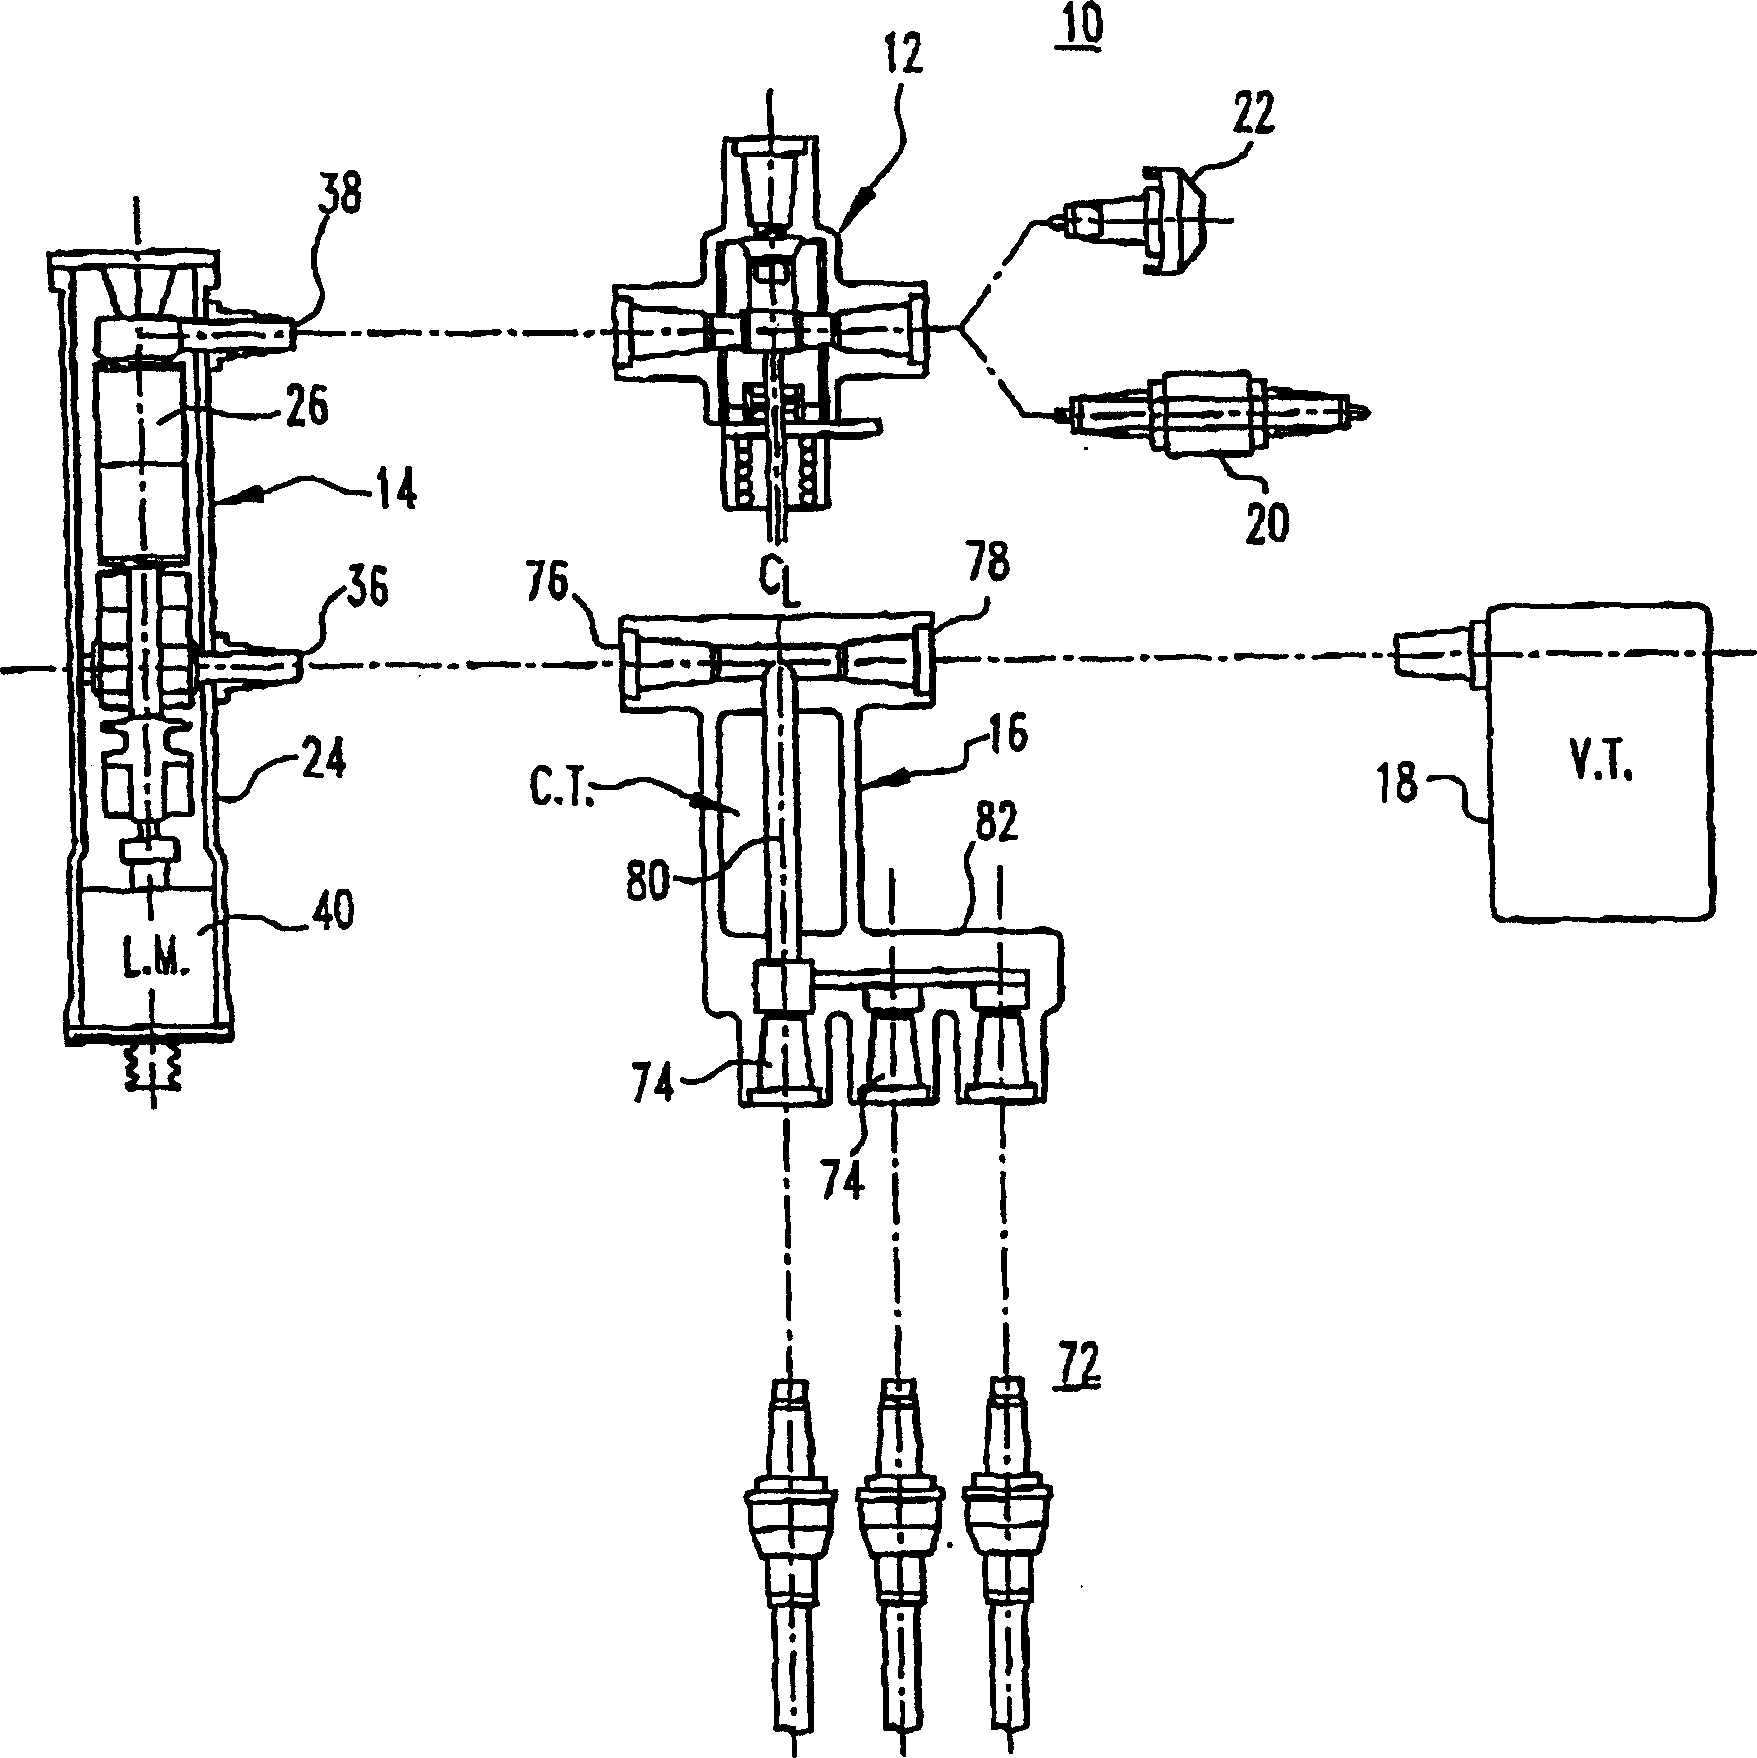 Integral coad connector module